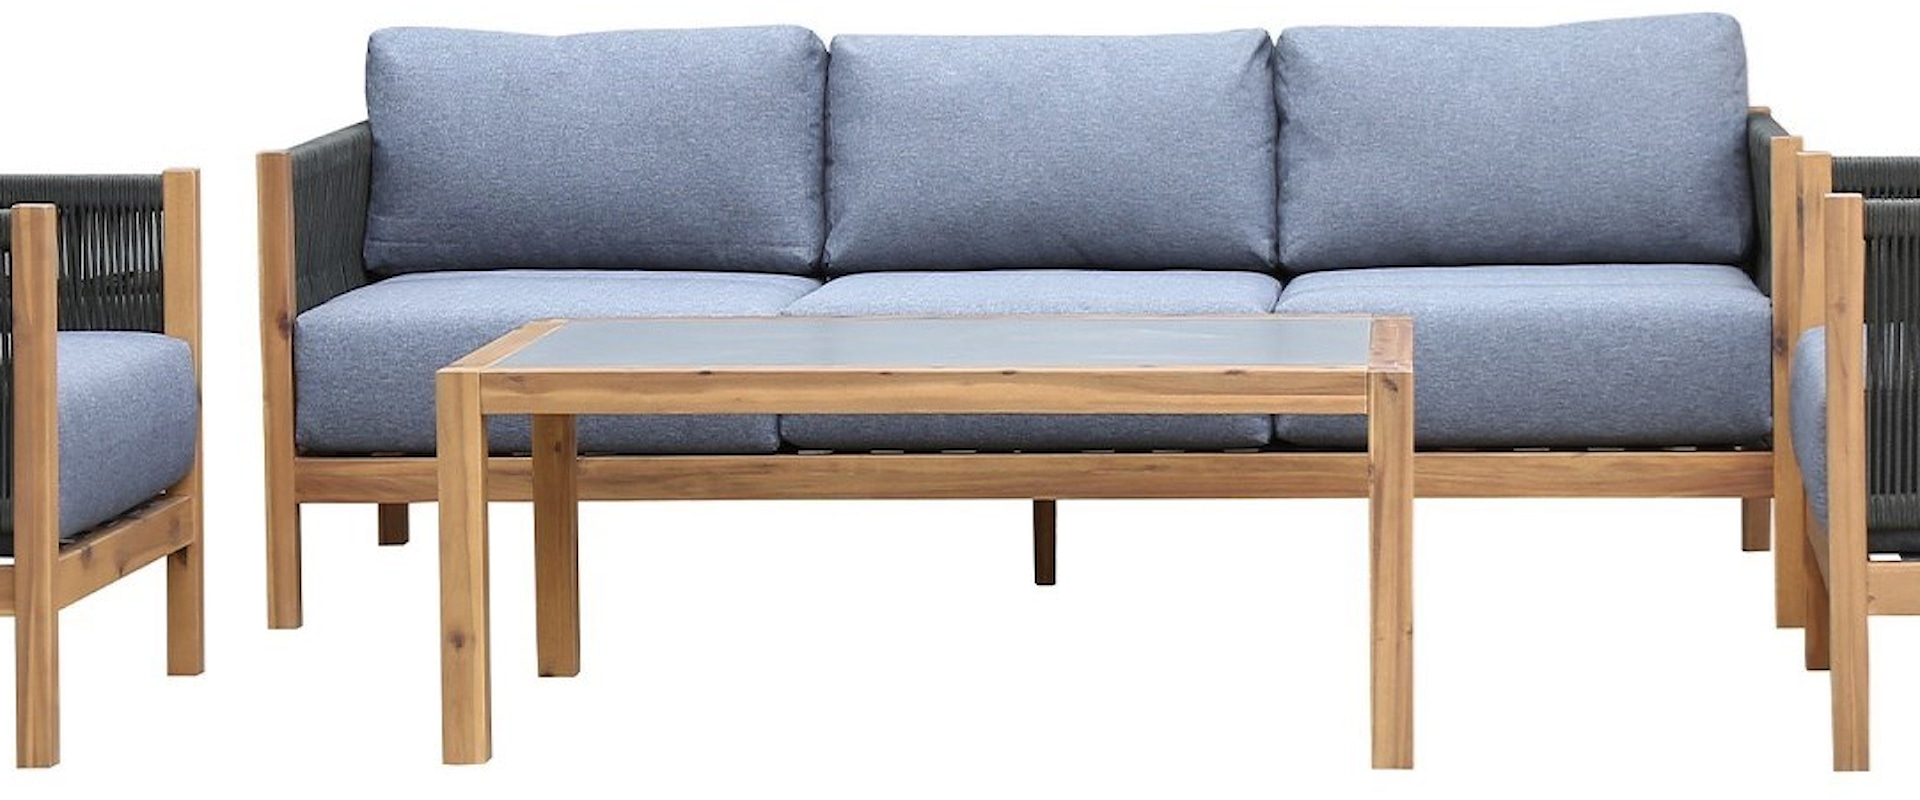 4-Piece Outdoor Patio Acacia Wood Sofa Seating Set with Teak Finish